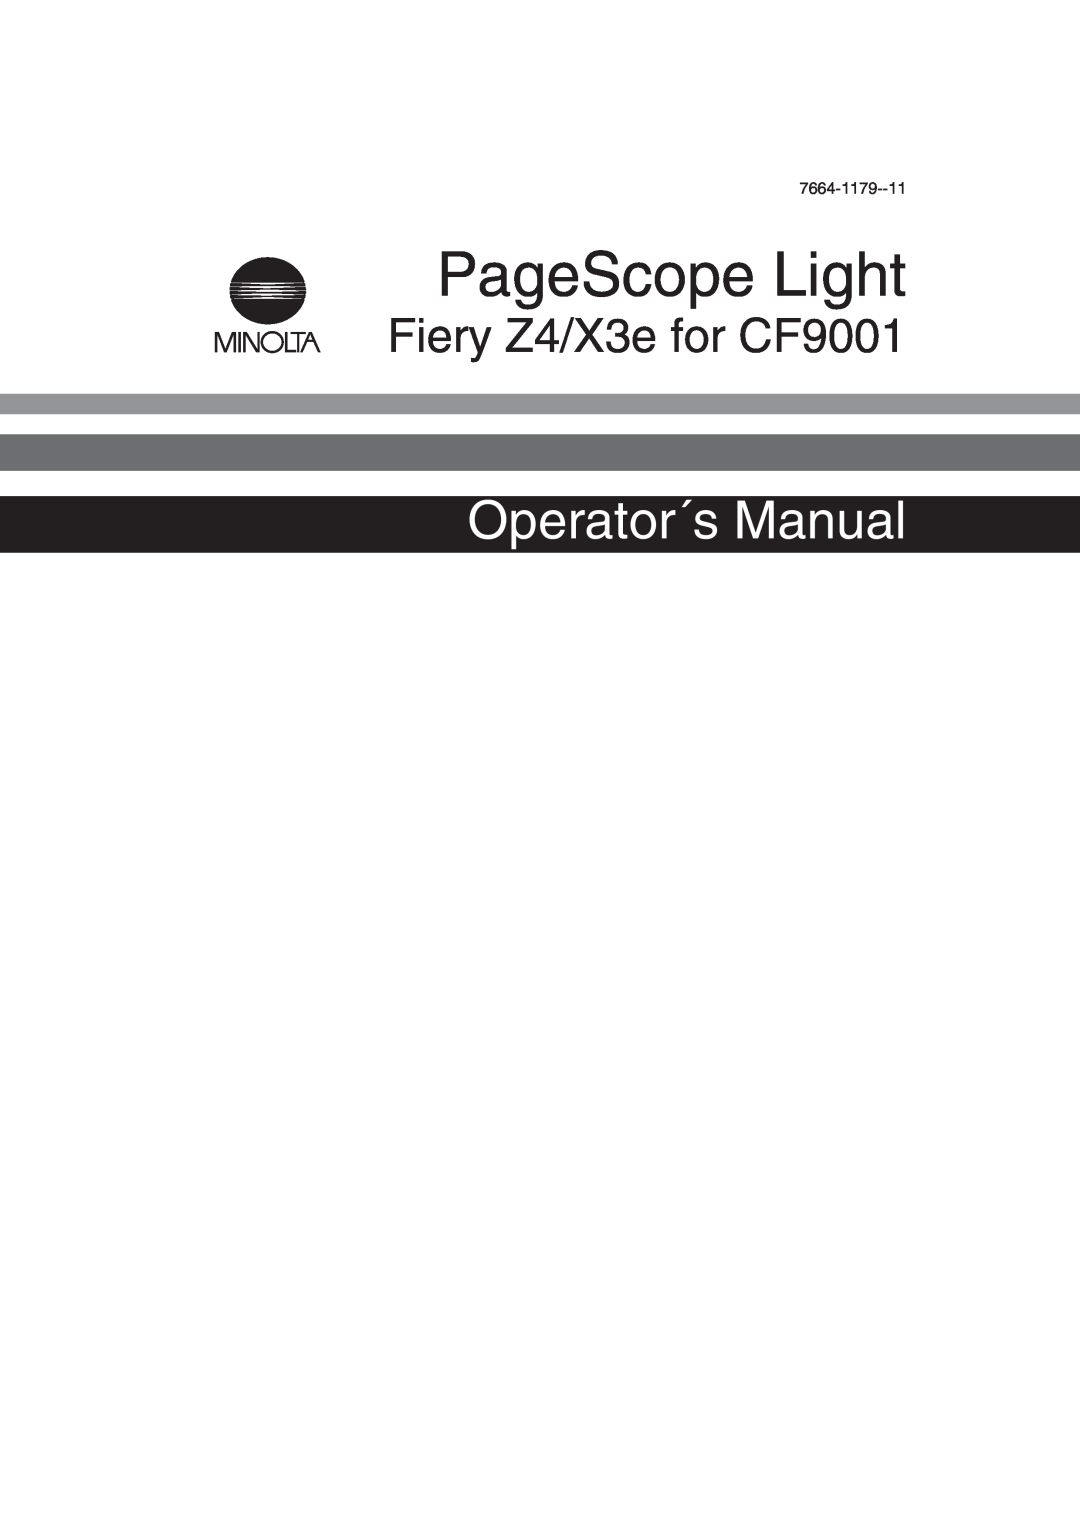 Minolta manual PageScope Light, Operator´s Manual, Fiery Z4/X3e for CF9001, 7664-1179--11 